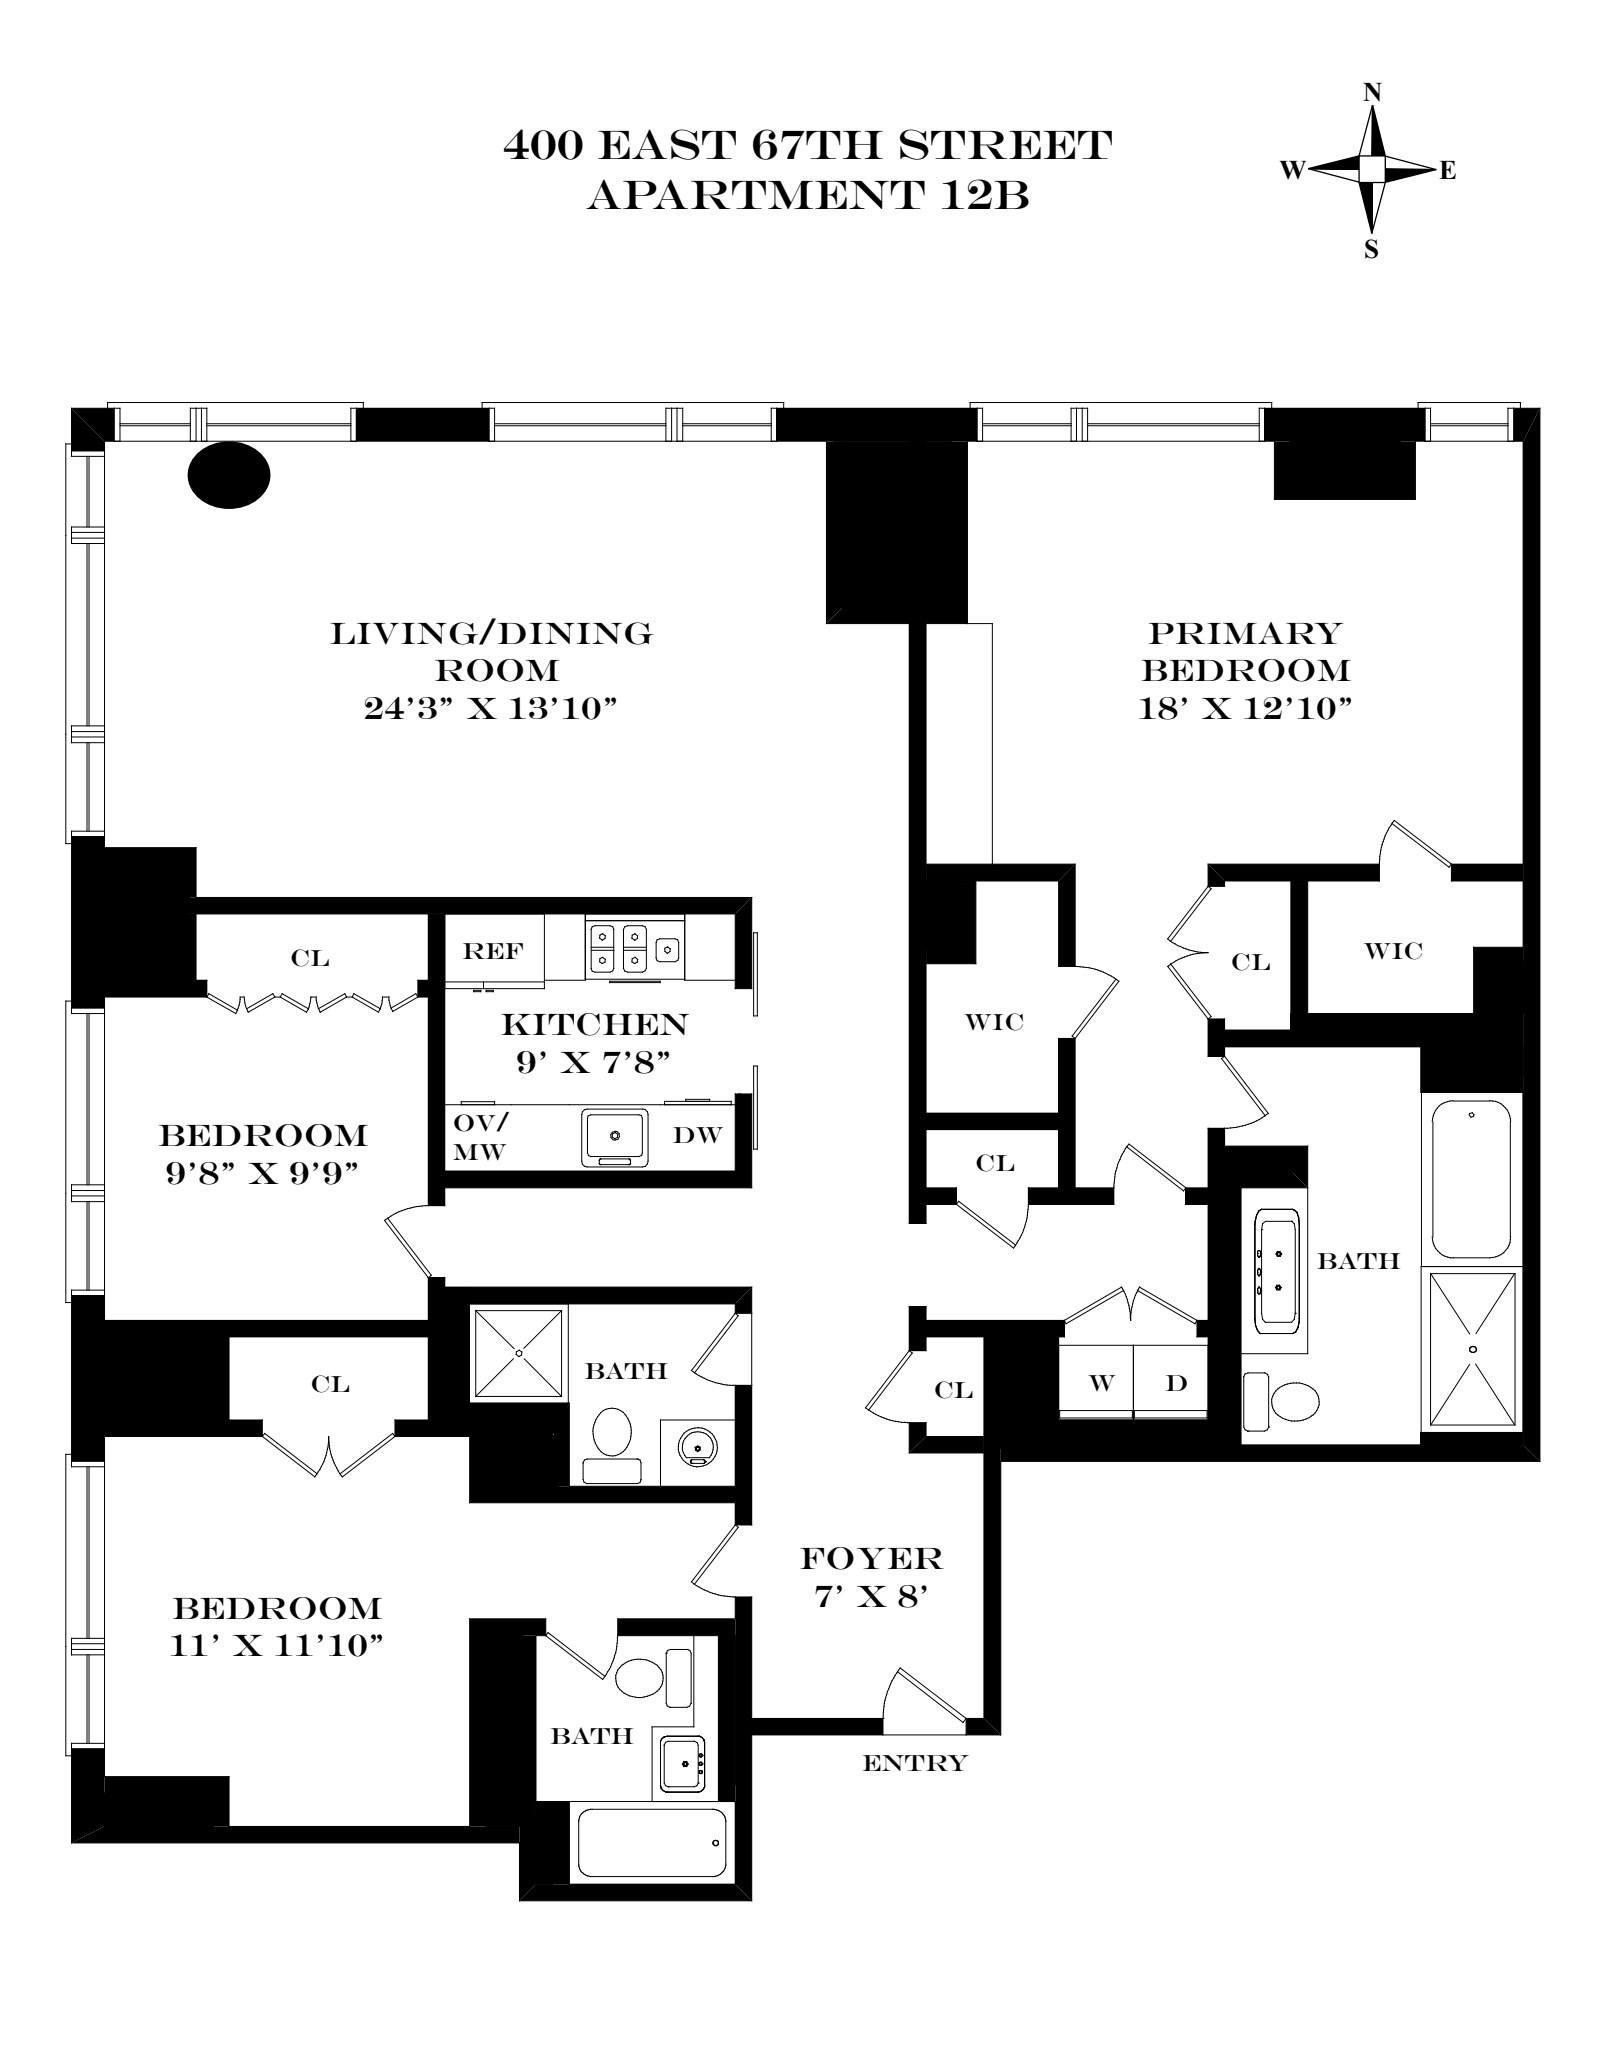 Floorplan for 400 East 67th Street, 12B